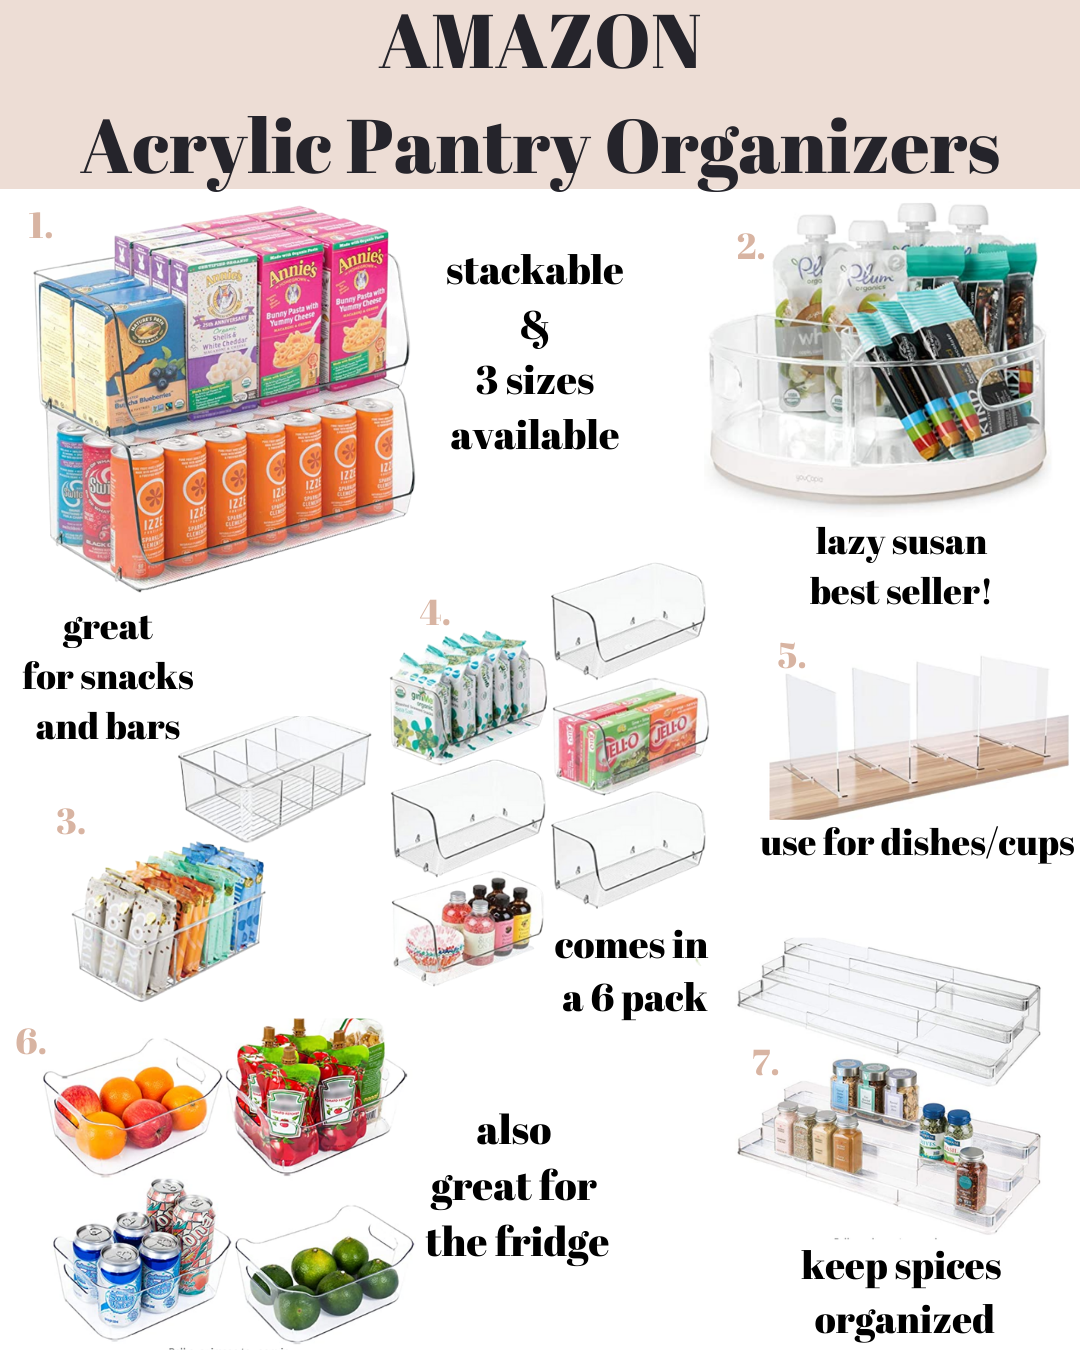 Amazon Acrylic Pantry Organizers